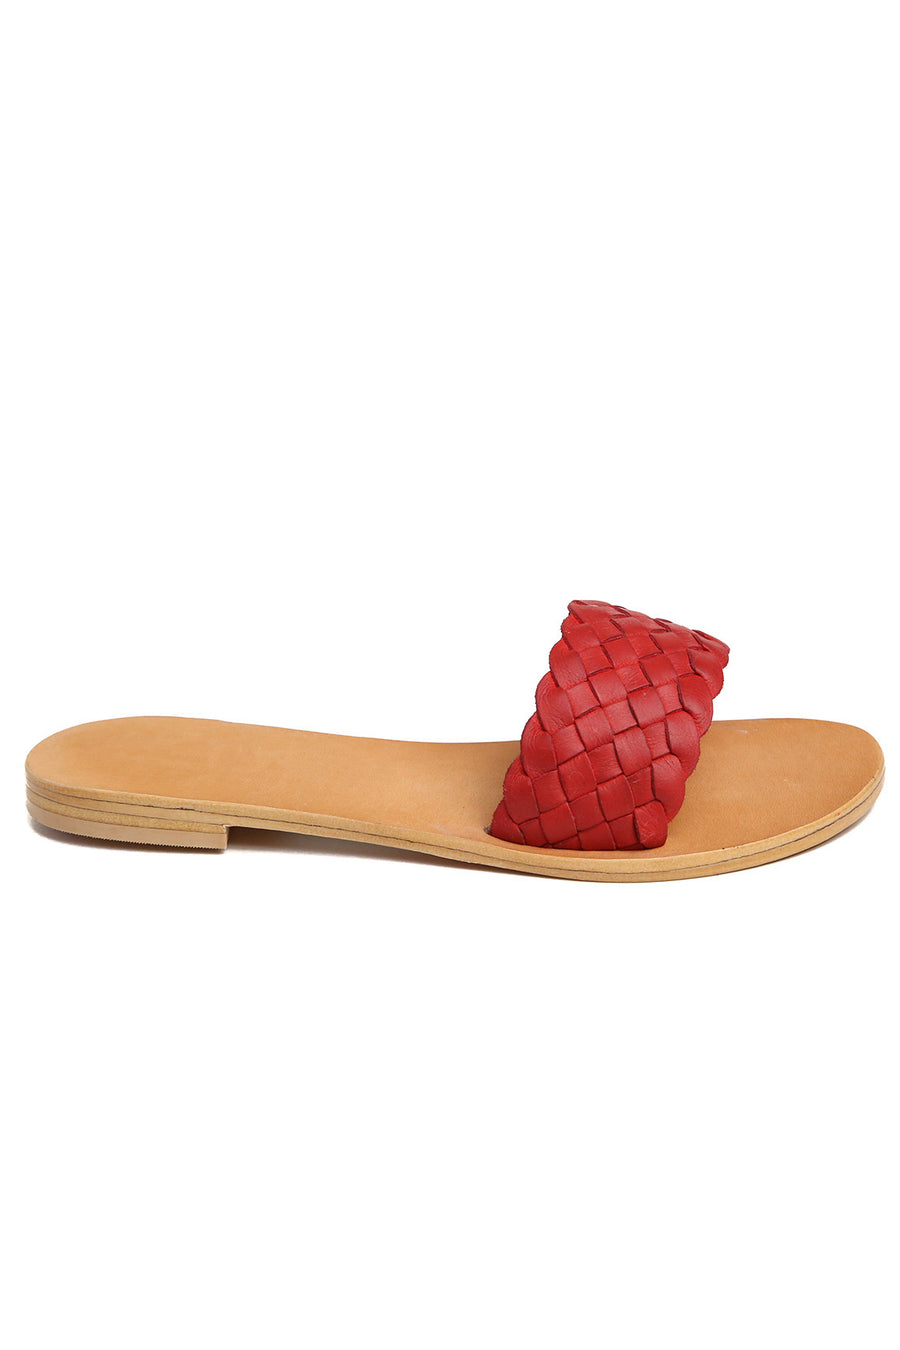 Malibu Red Braided Leather Slide Sandal Front